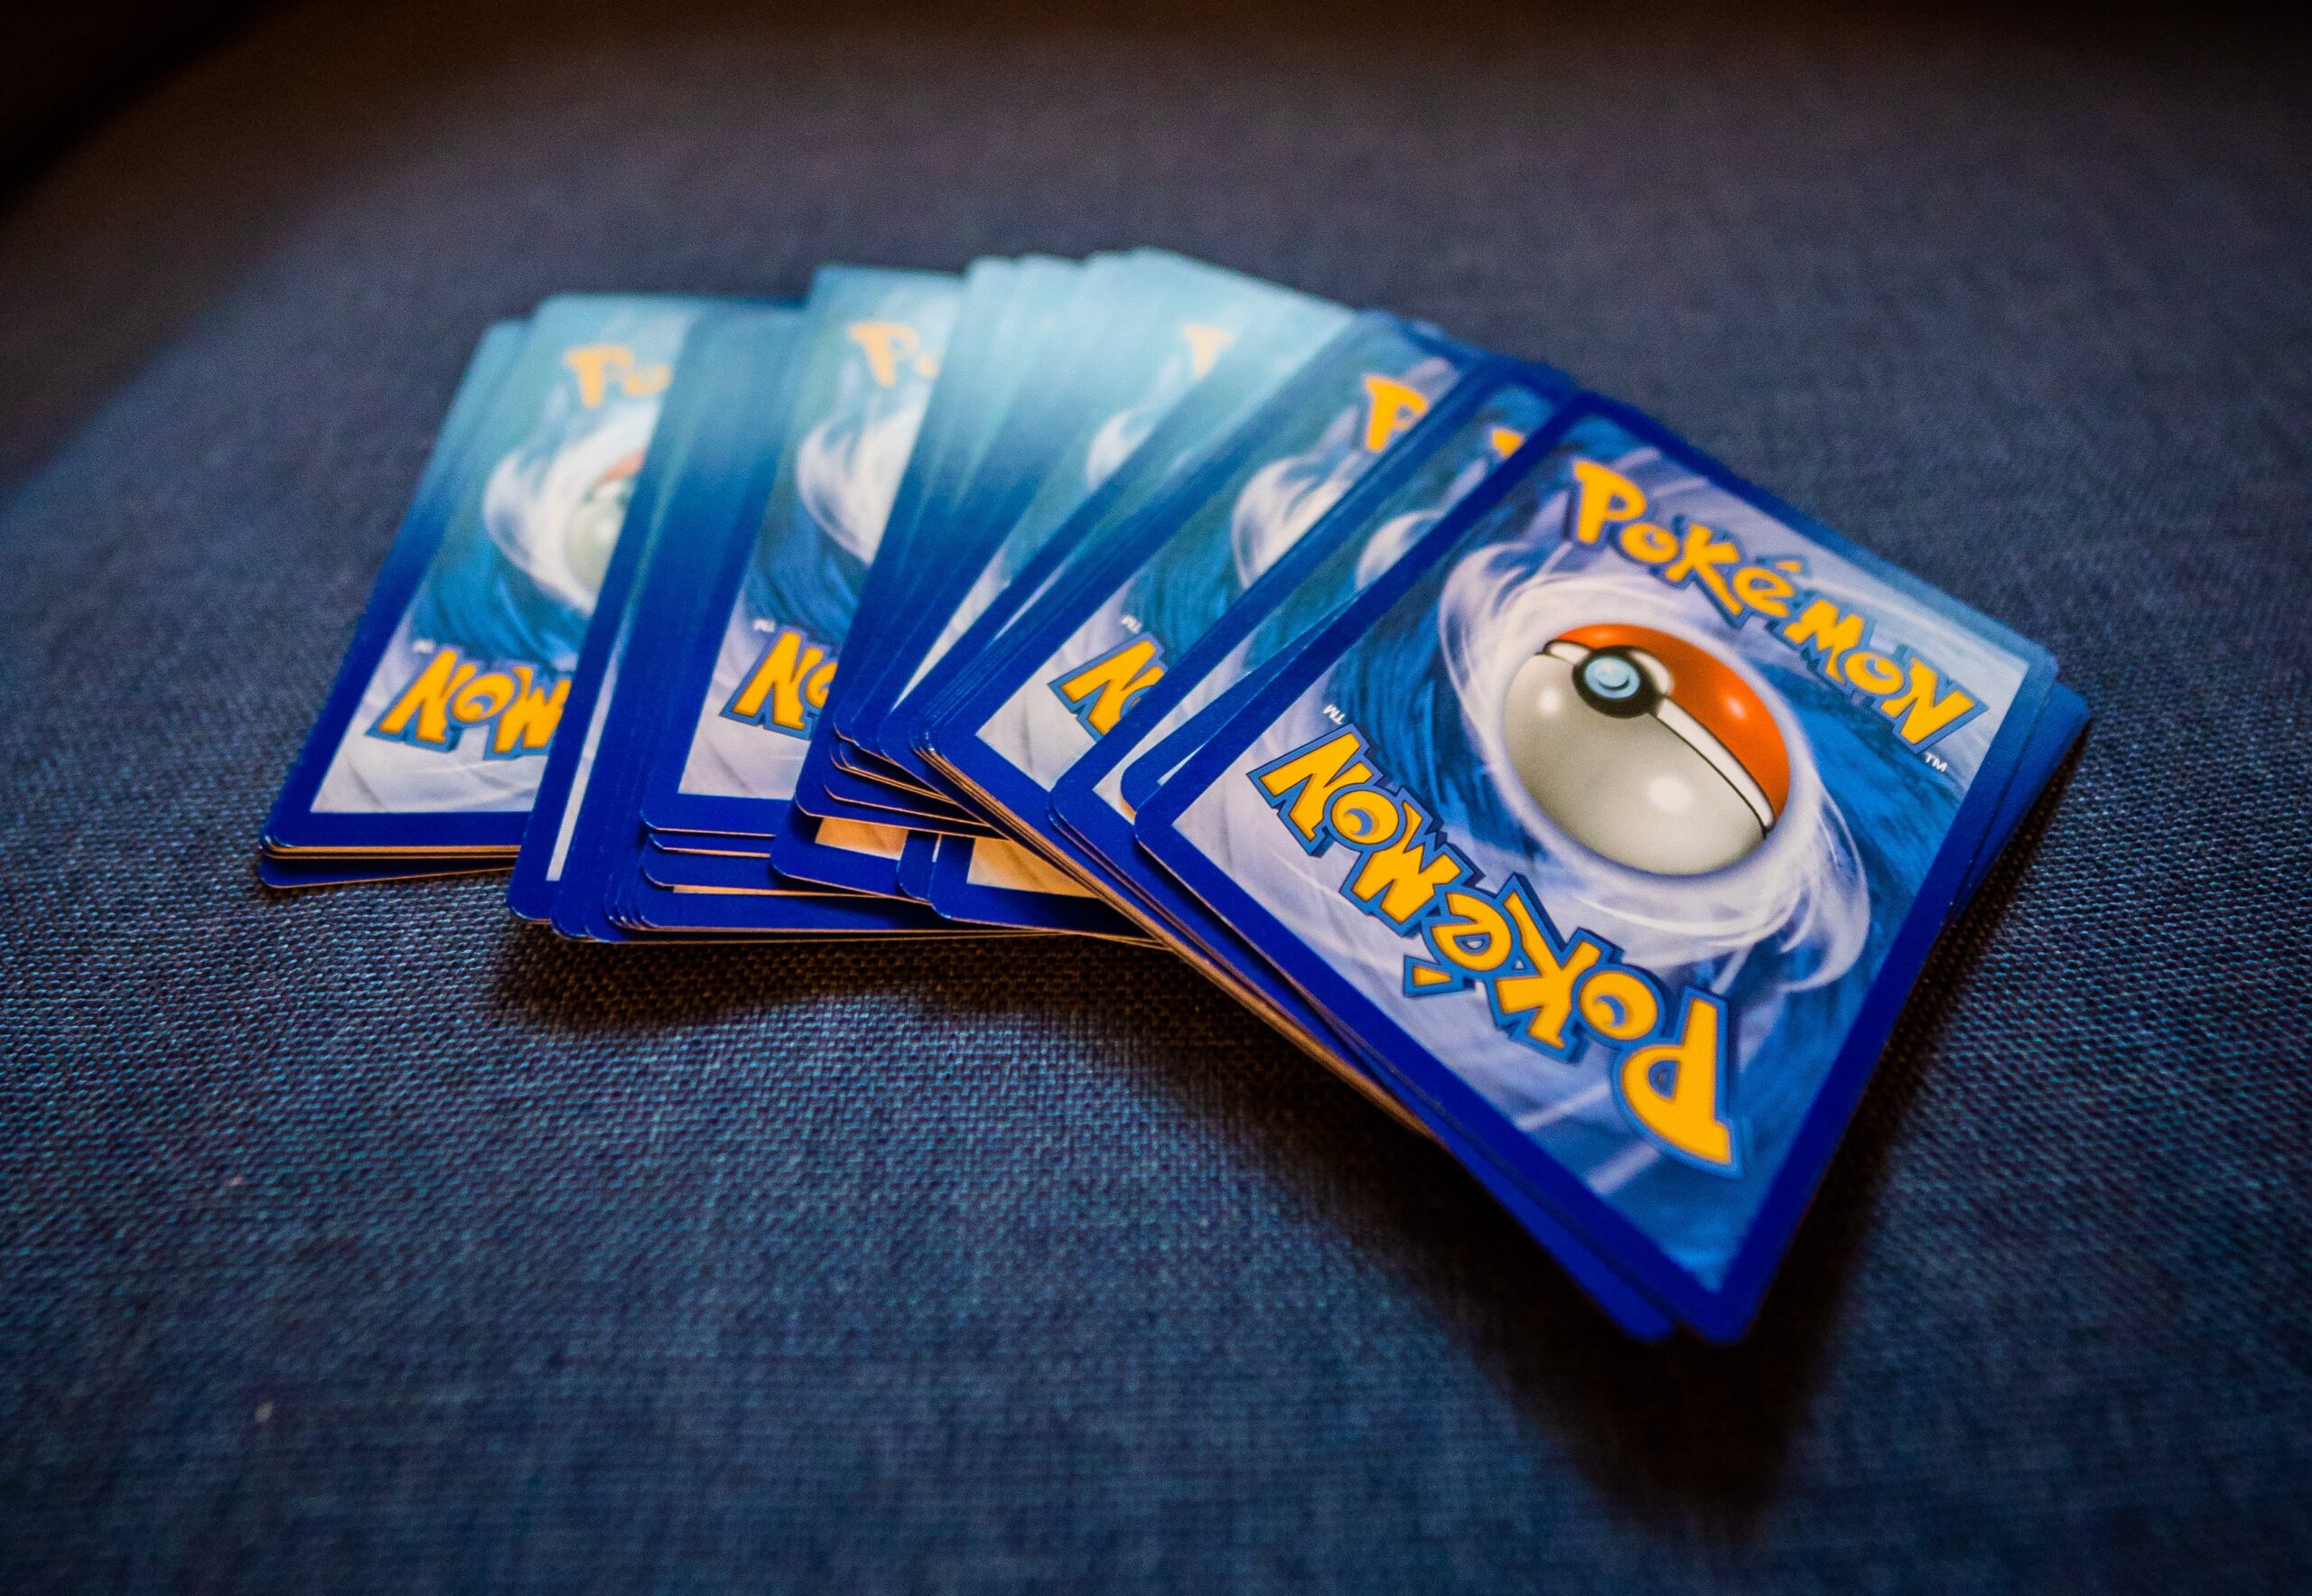 several Pokemon Collectible Trading Card Games shown